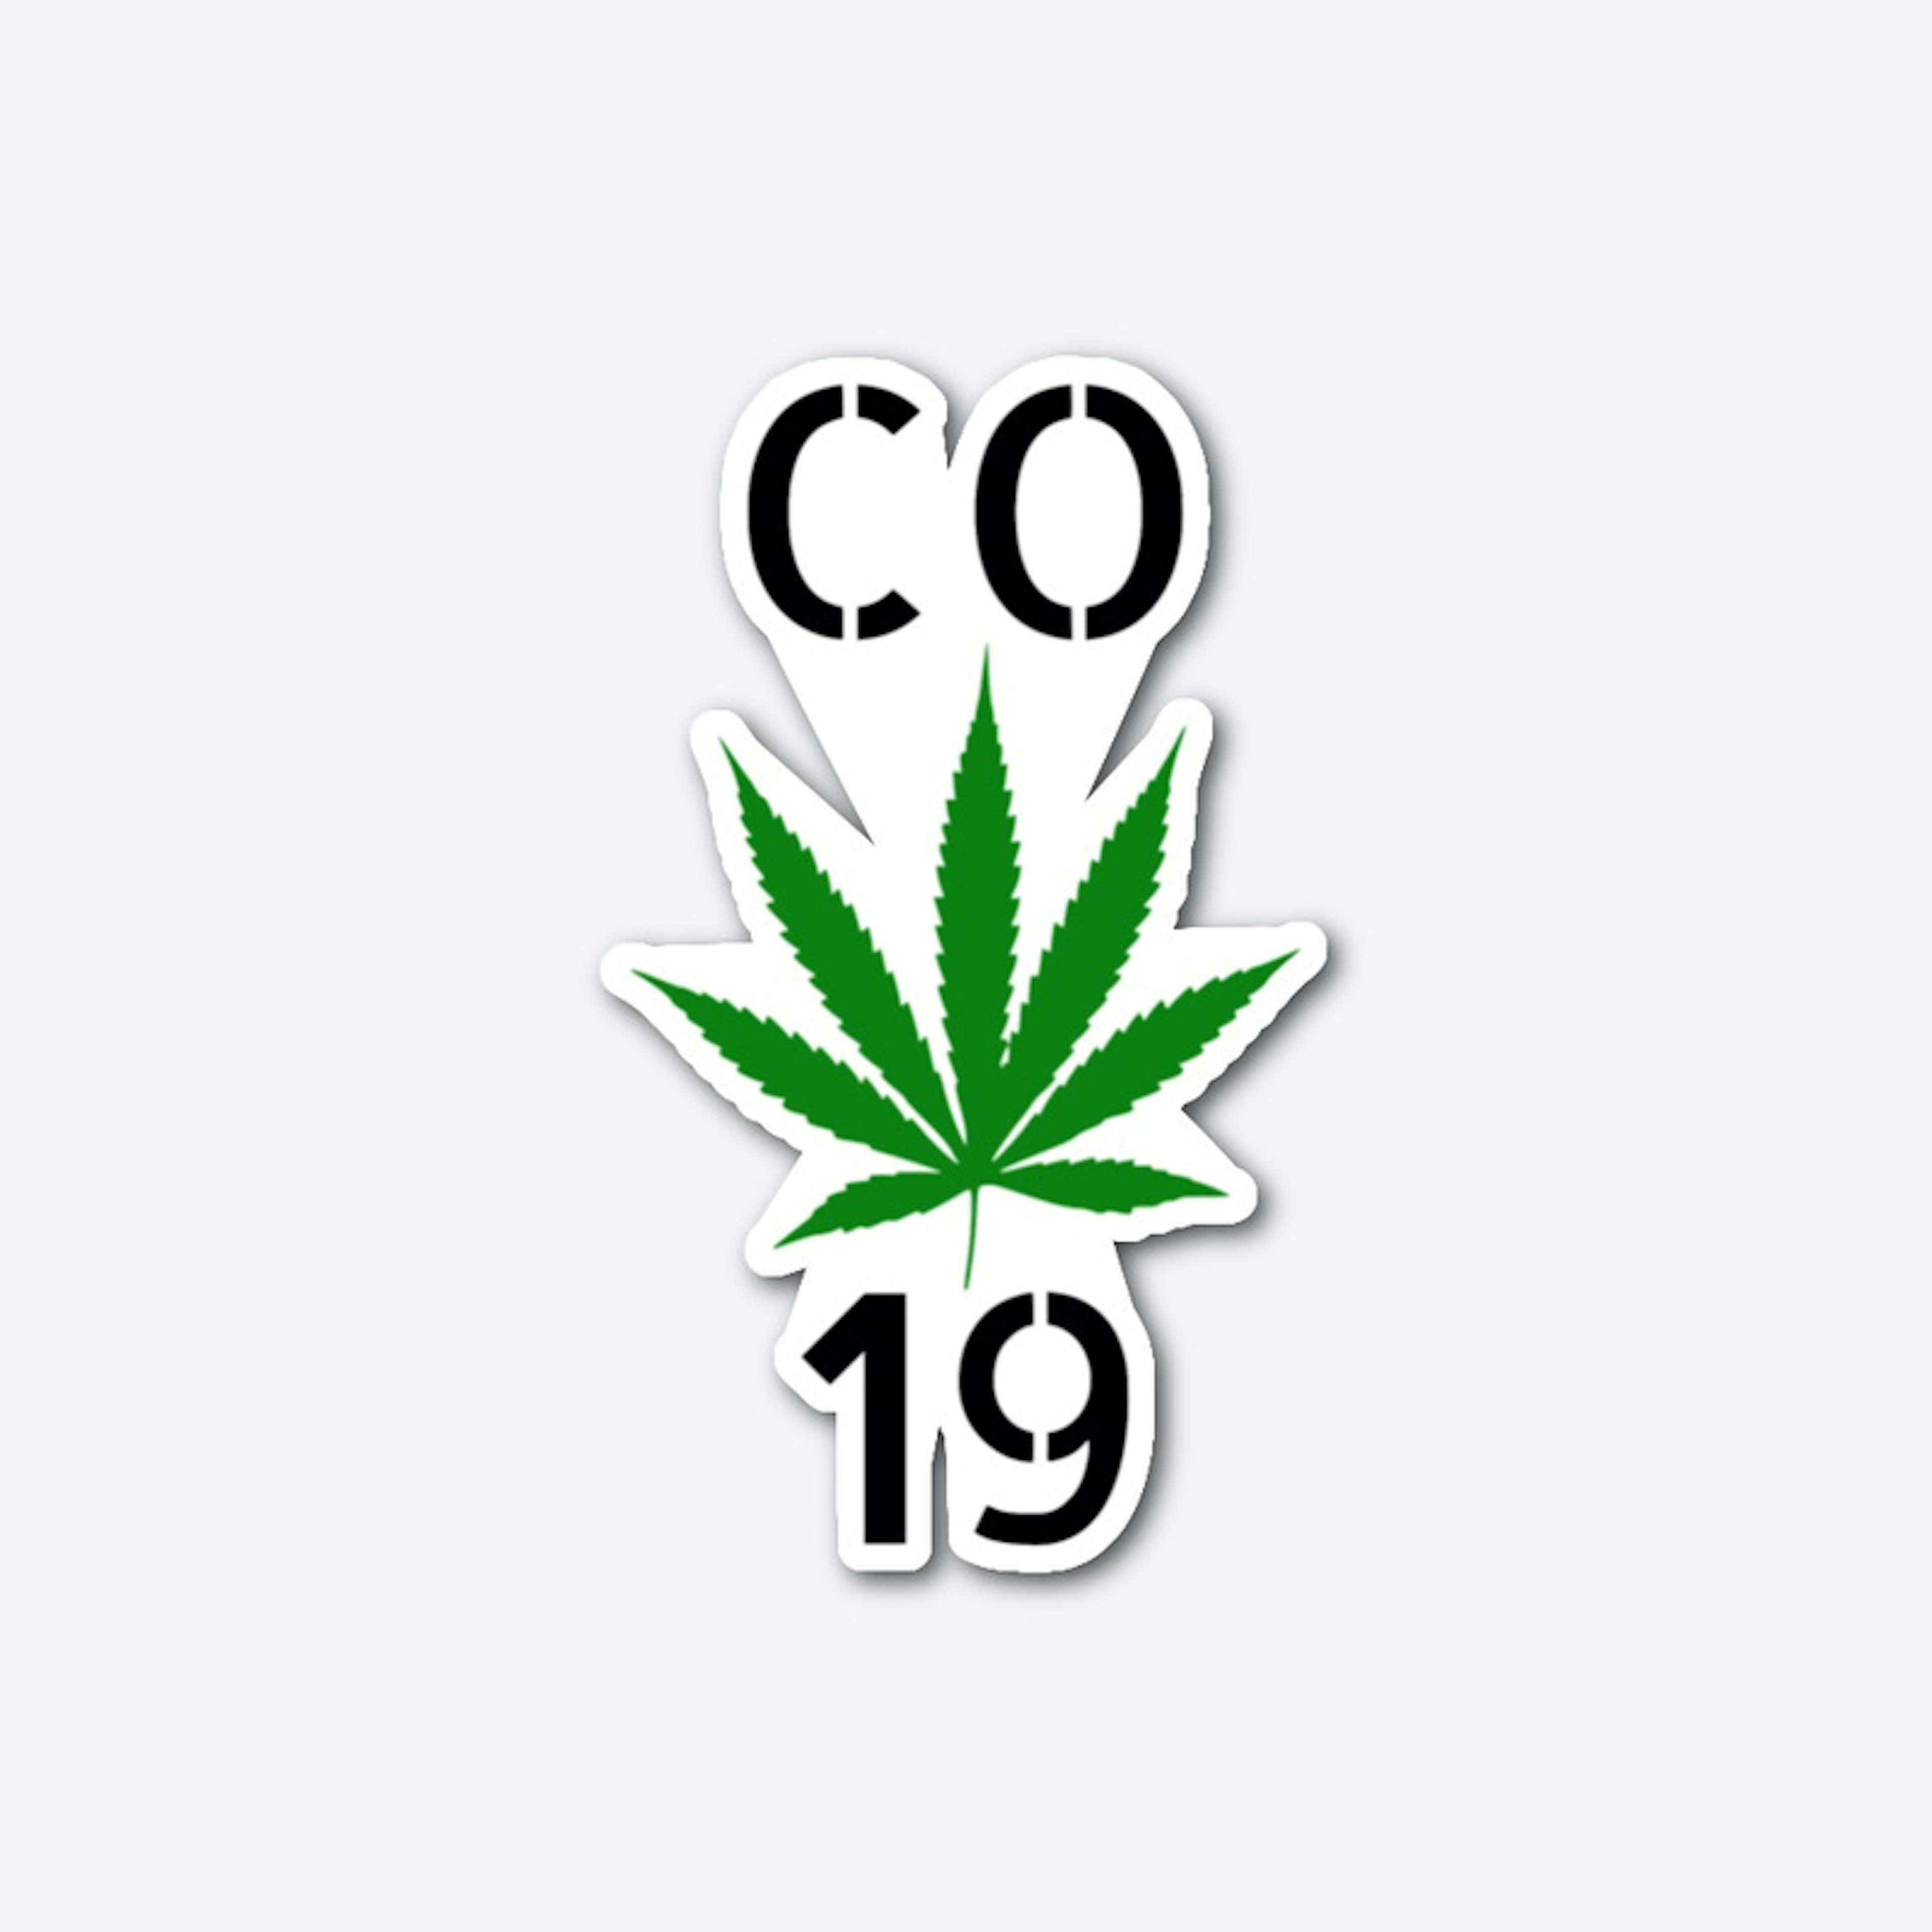 COWEED 19